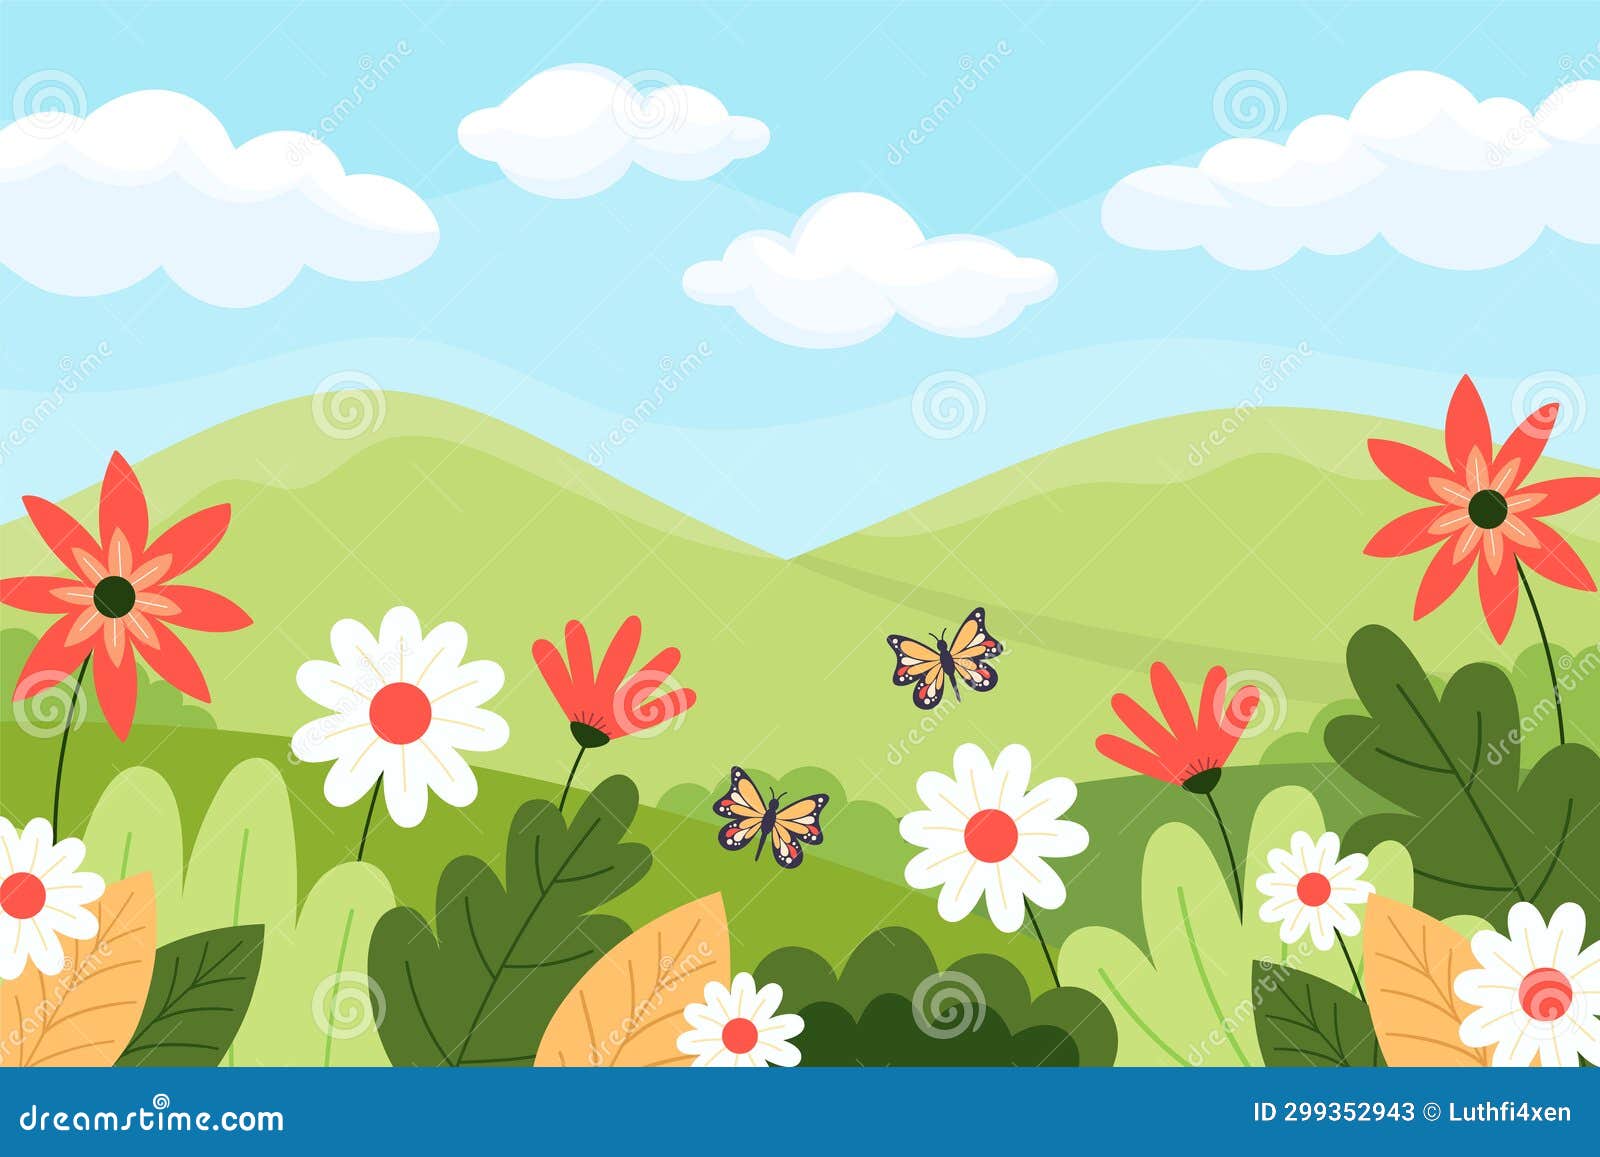 floral spring season background